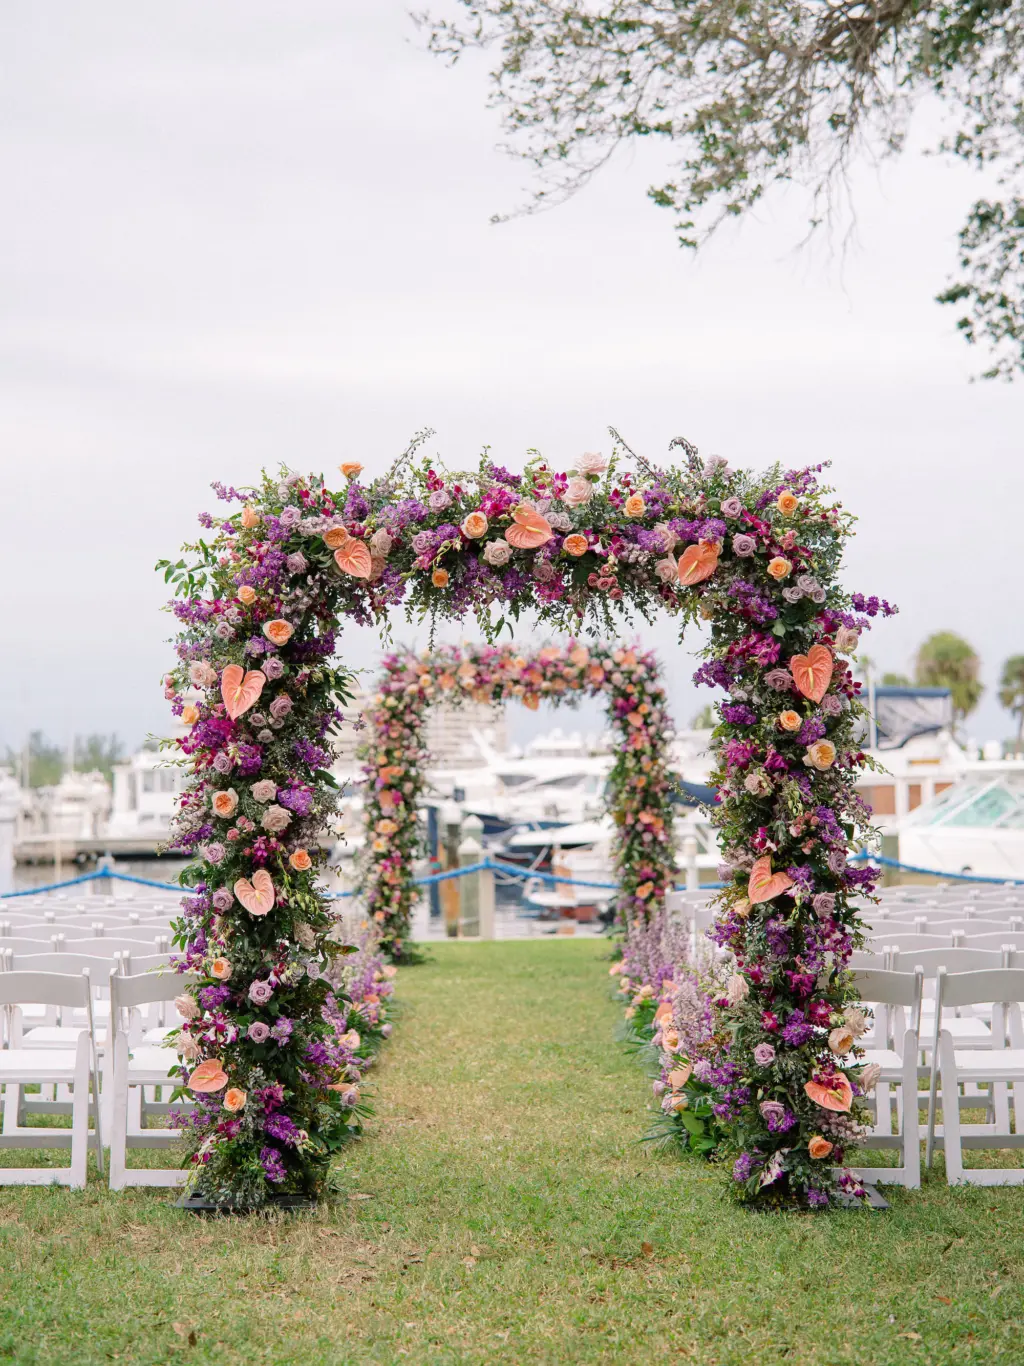 Tropical Floral Aisle Arch Inspiration | Orange Anthurium, Pink Roses, Purple Foxglove Flowers, and Greenery | Waterfront Wedding Ceremony Ideas | Sarasota Florist Botanica Design Studio